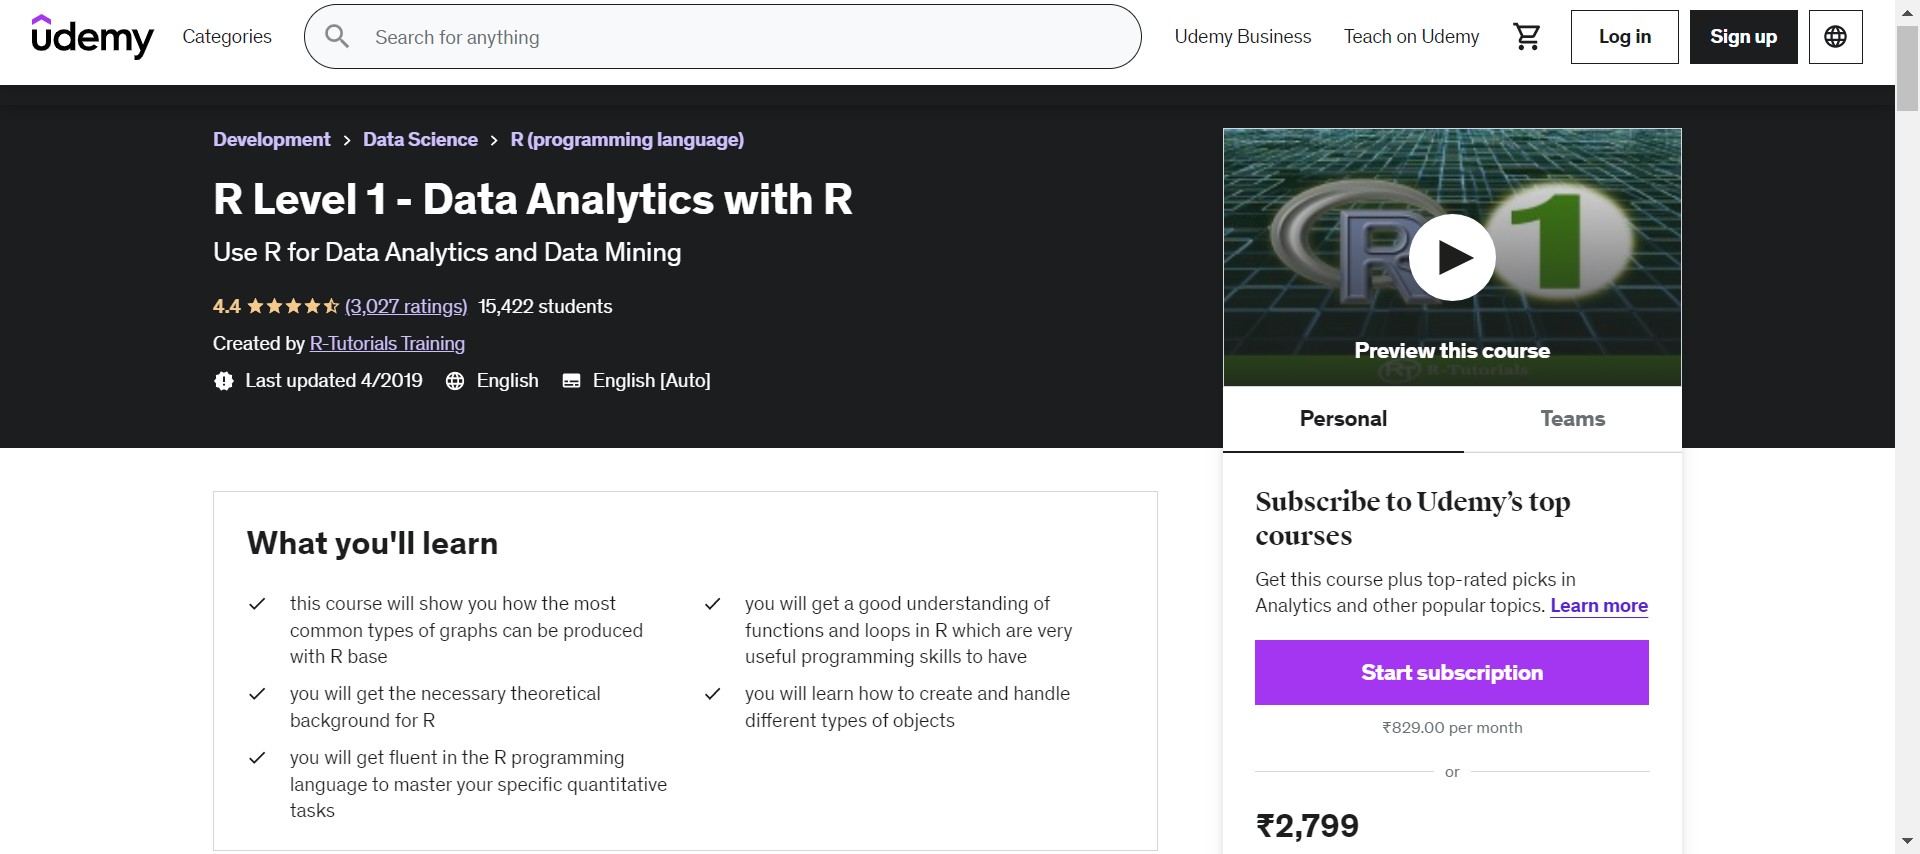 R Level 1 - Data Analytics with R